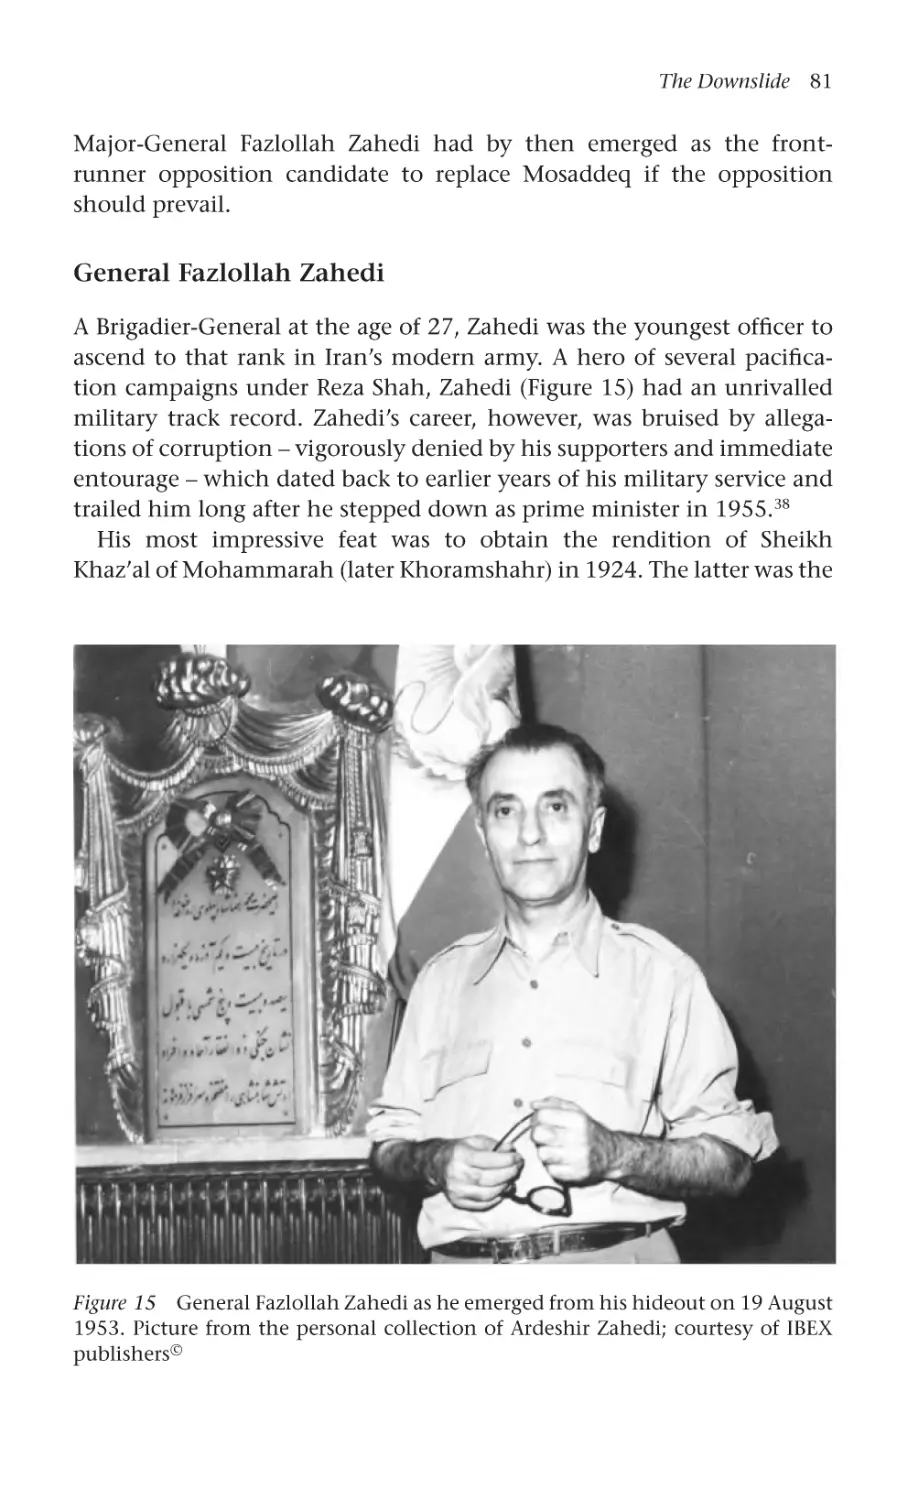 General Fazlollah Zahedi